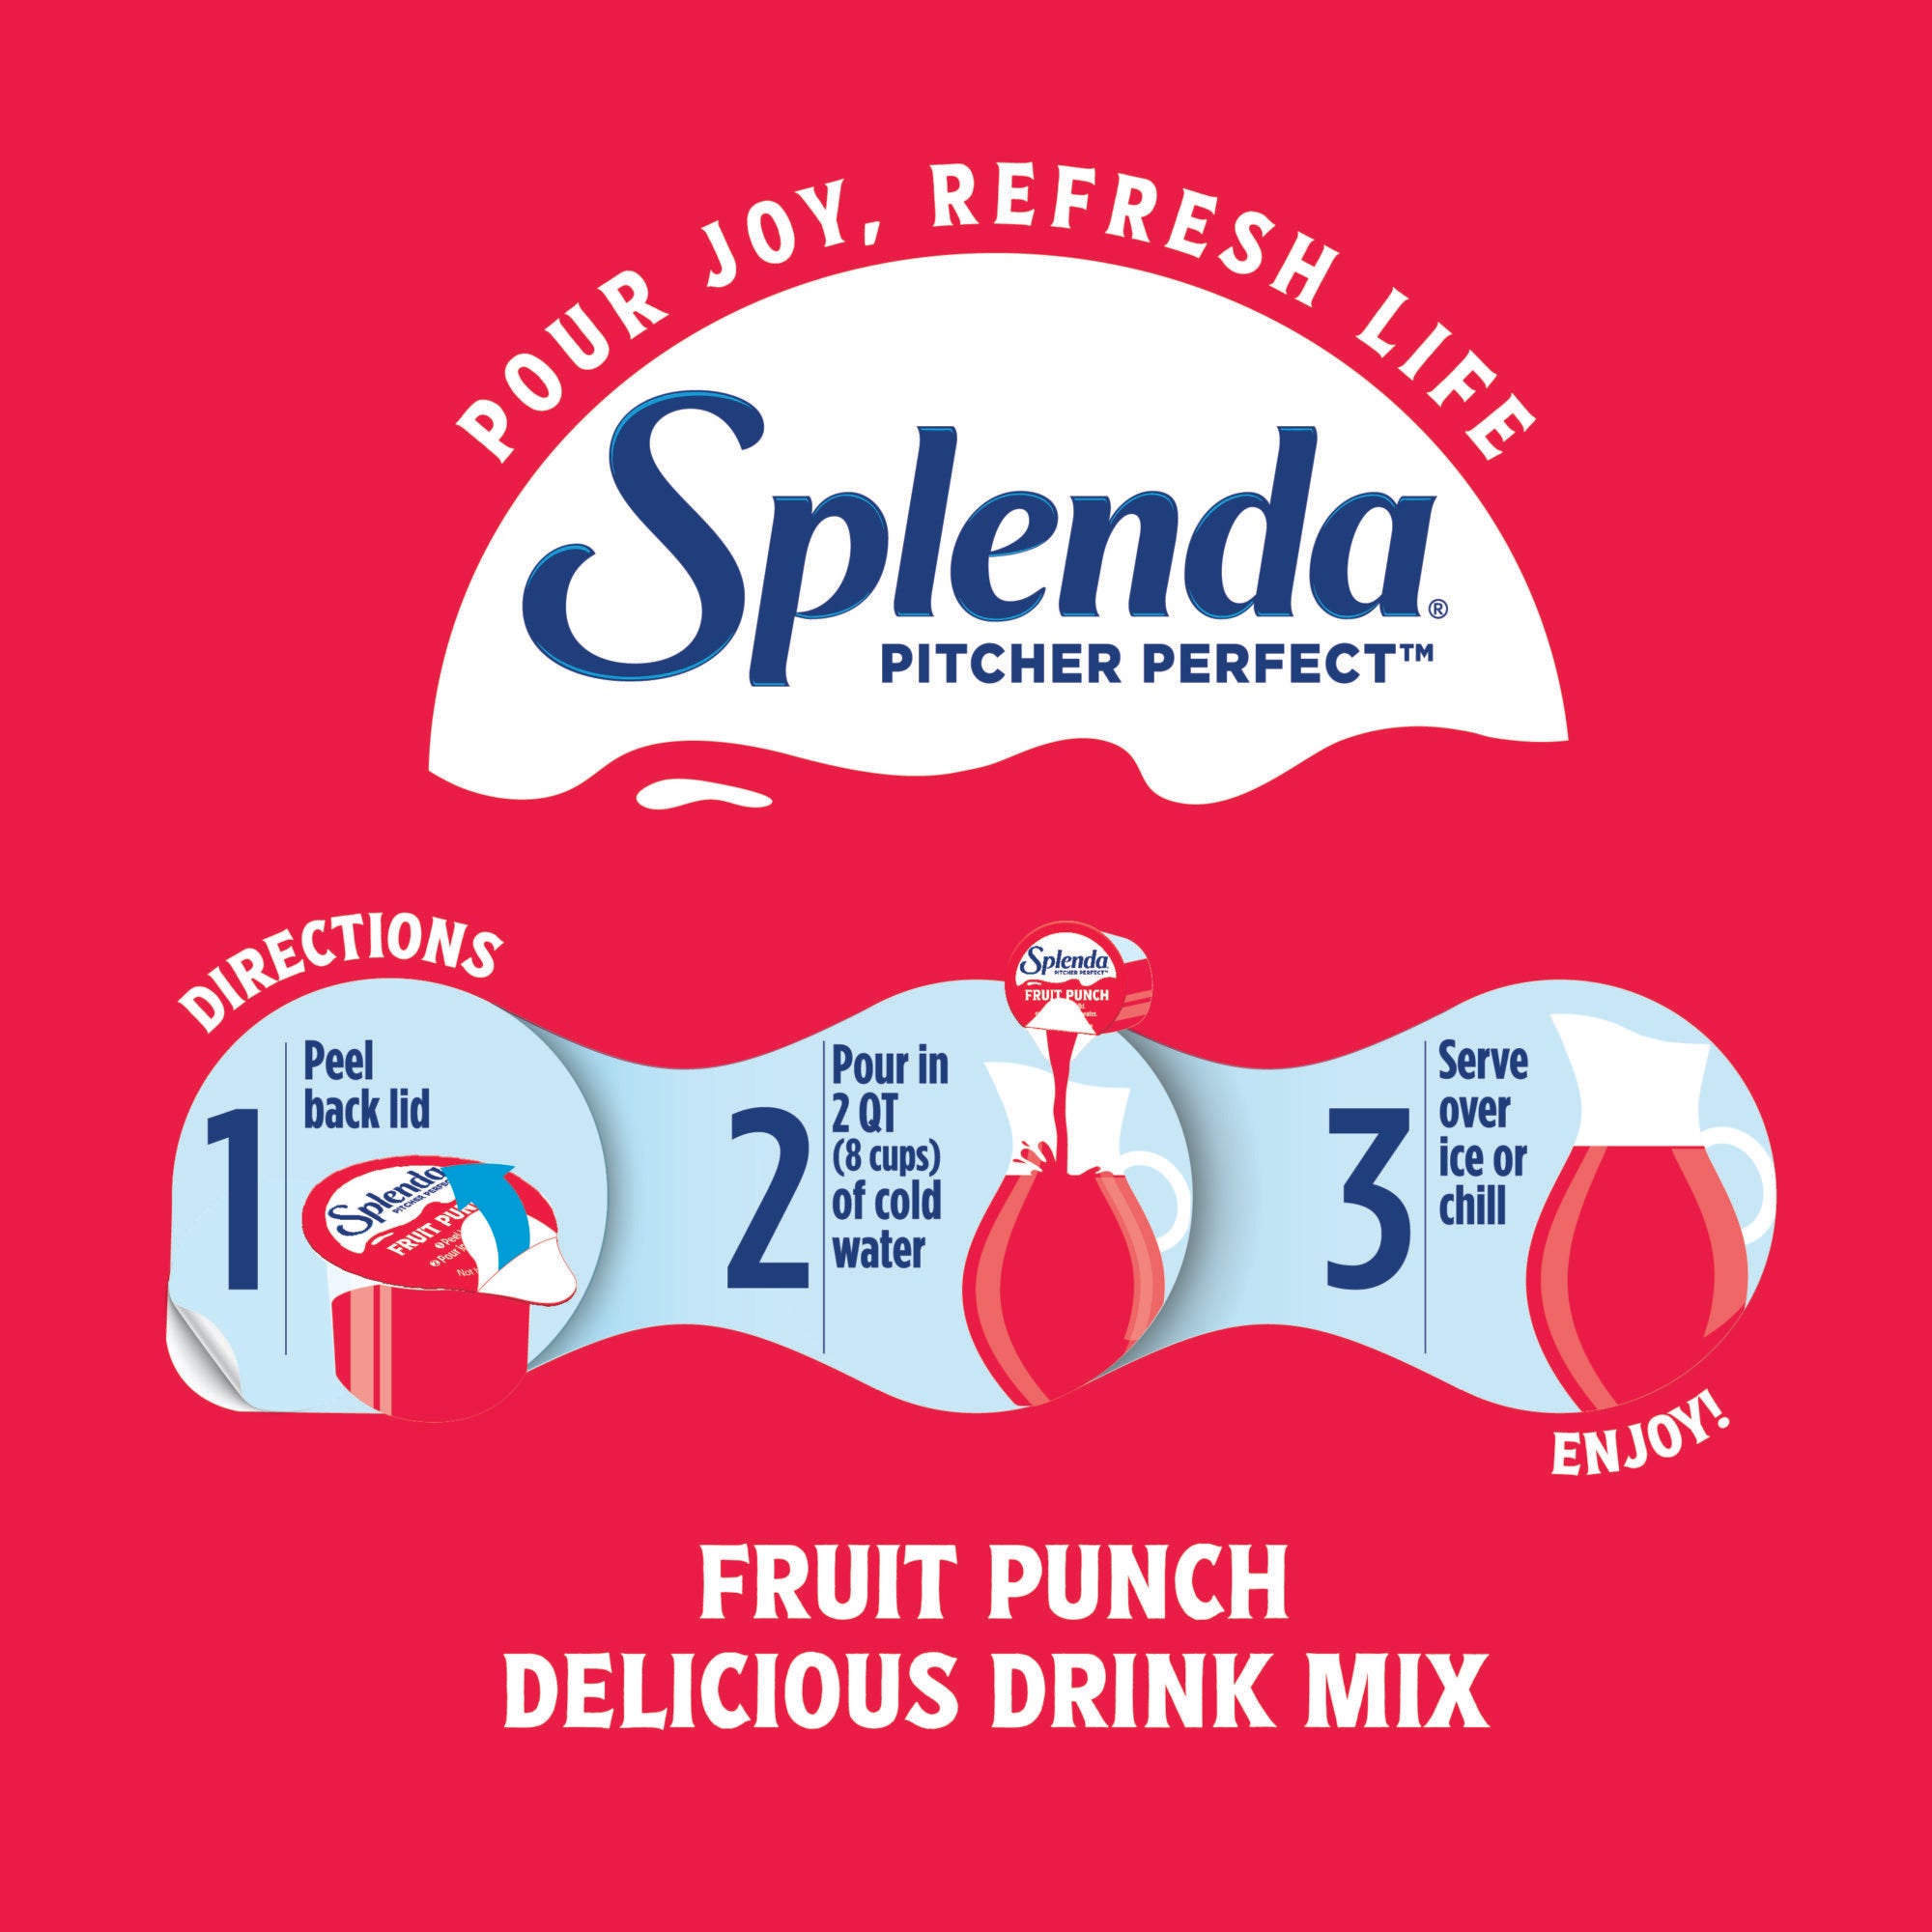 Splenda Pitcher Perfect Fruit Punch Zero Sugar Drink Mix – Instructions